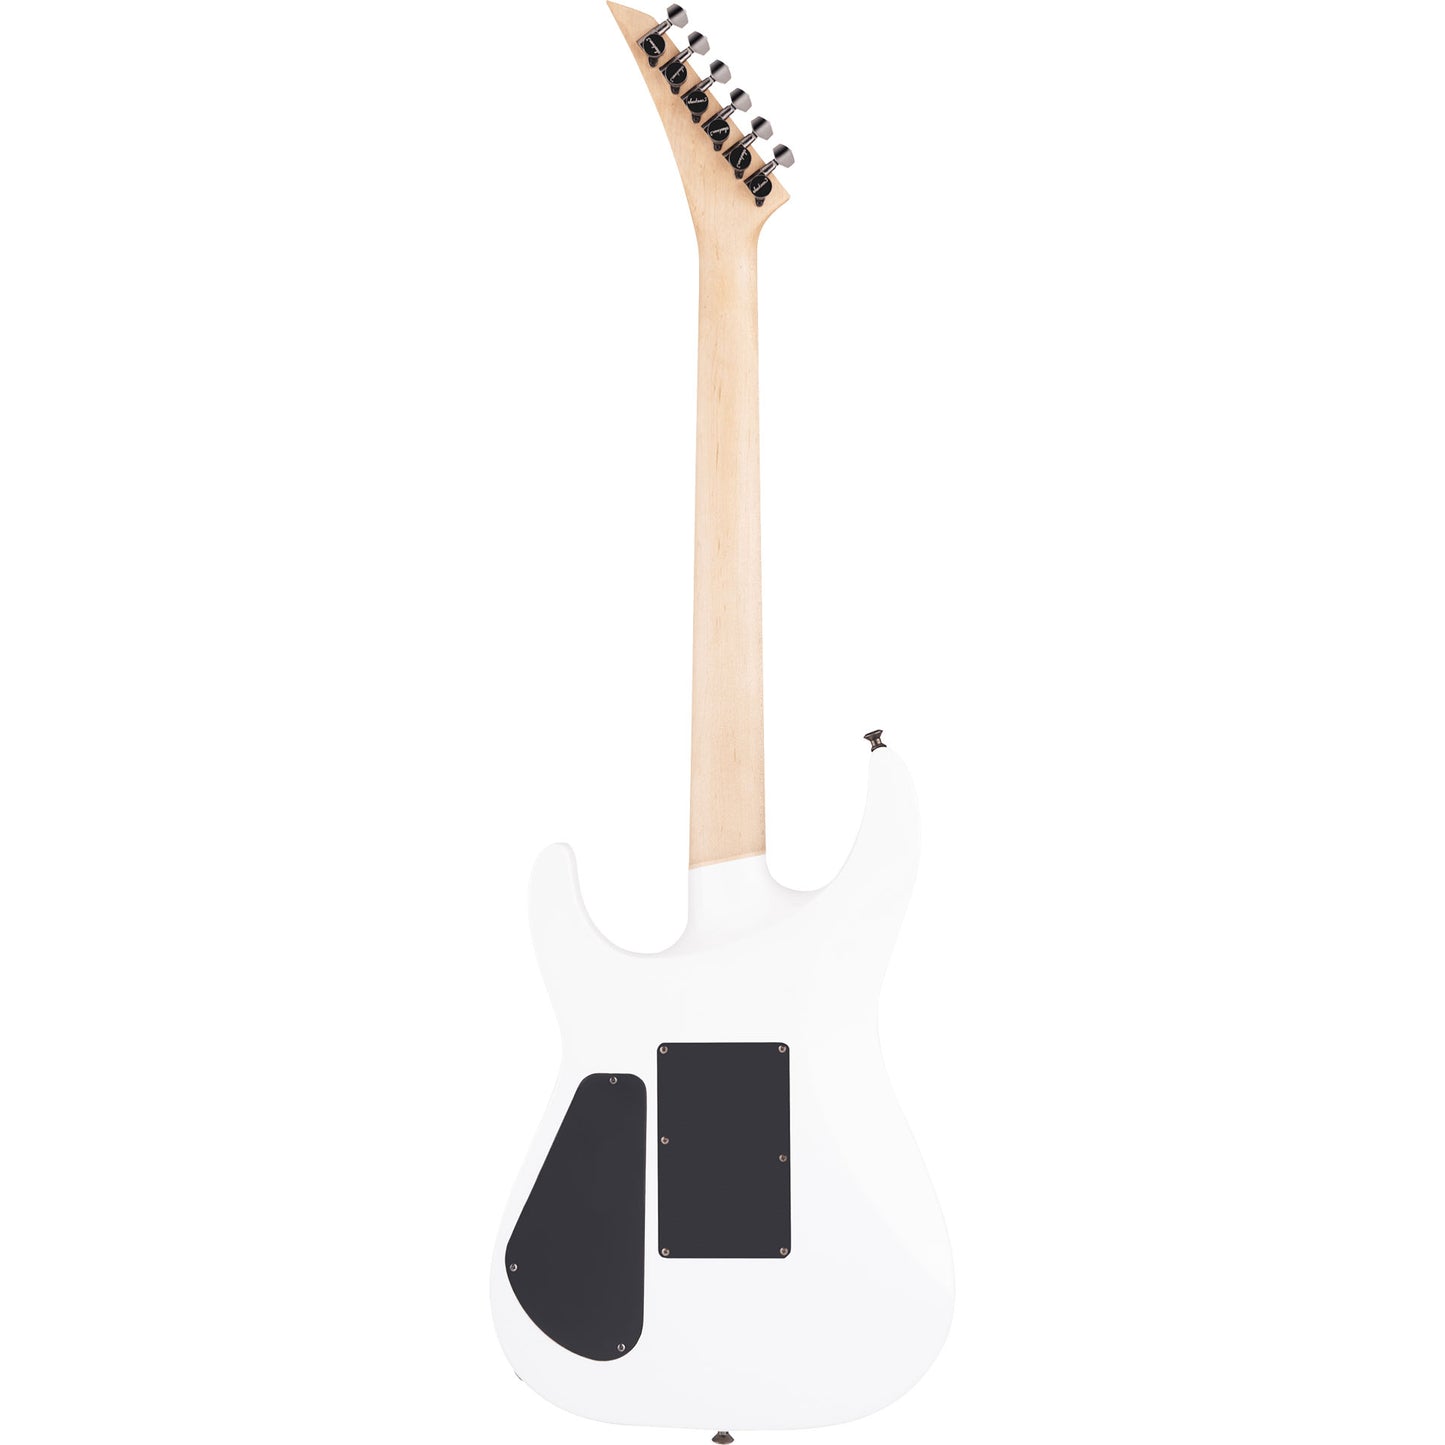 Jackson Pro Series Soloist™ SL2A MAH Electric Guitar, Unicorn White